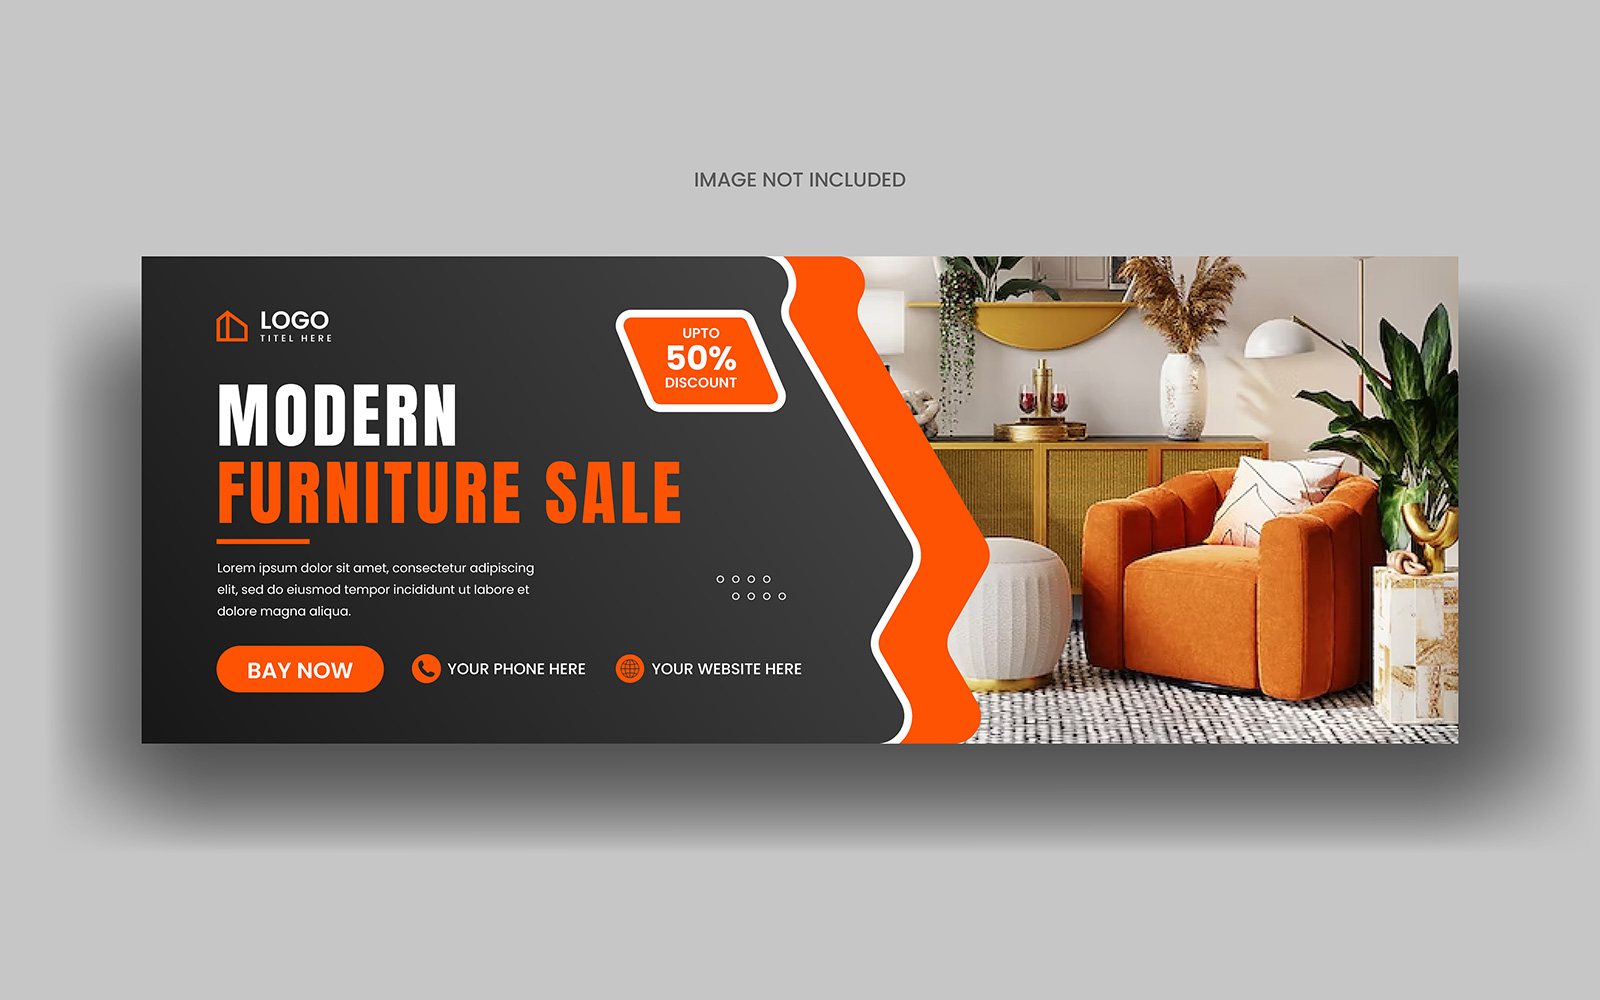 Furniture sale social media facebook cover banner template and web banner design